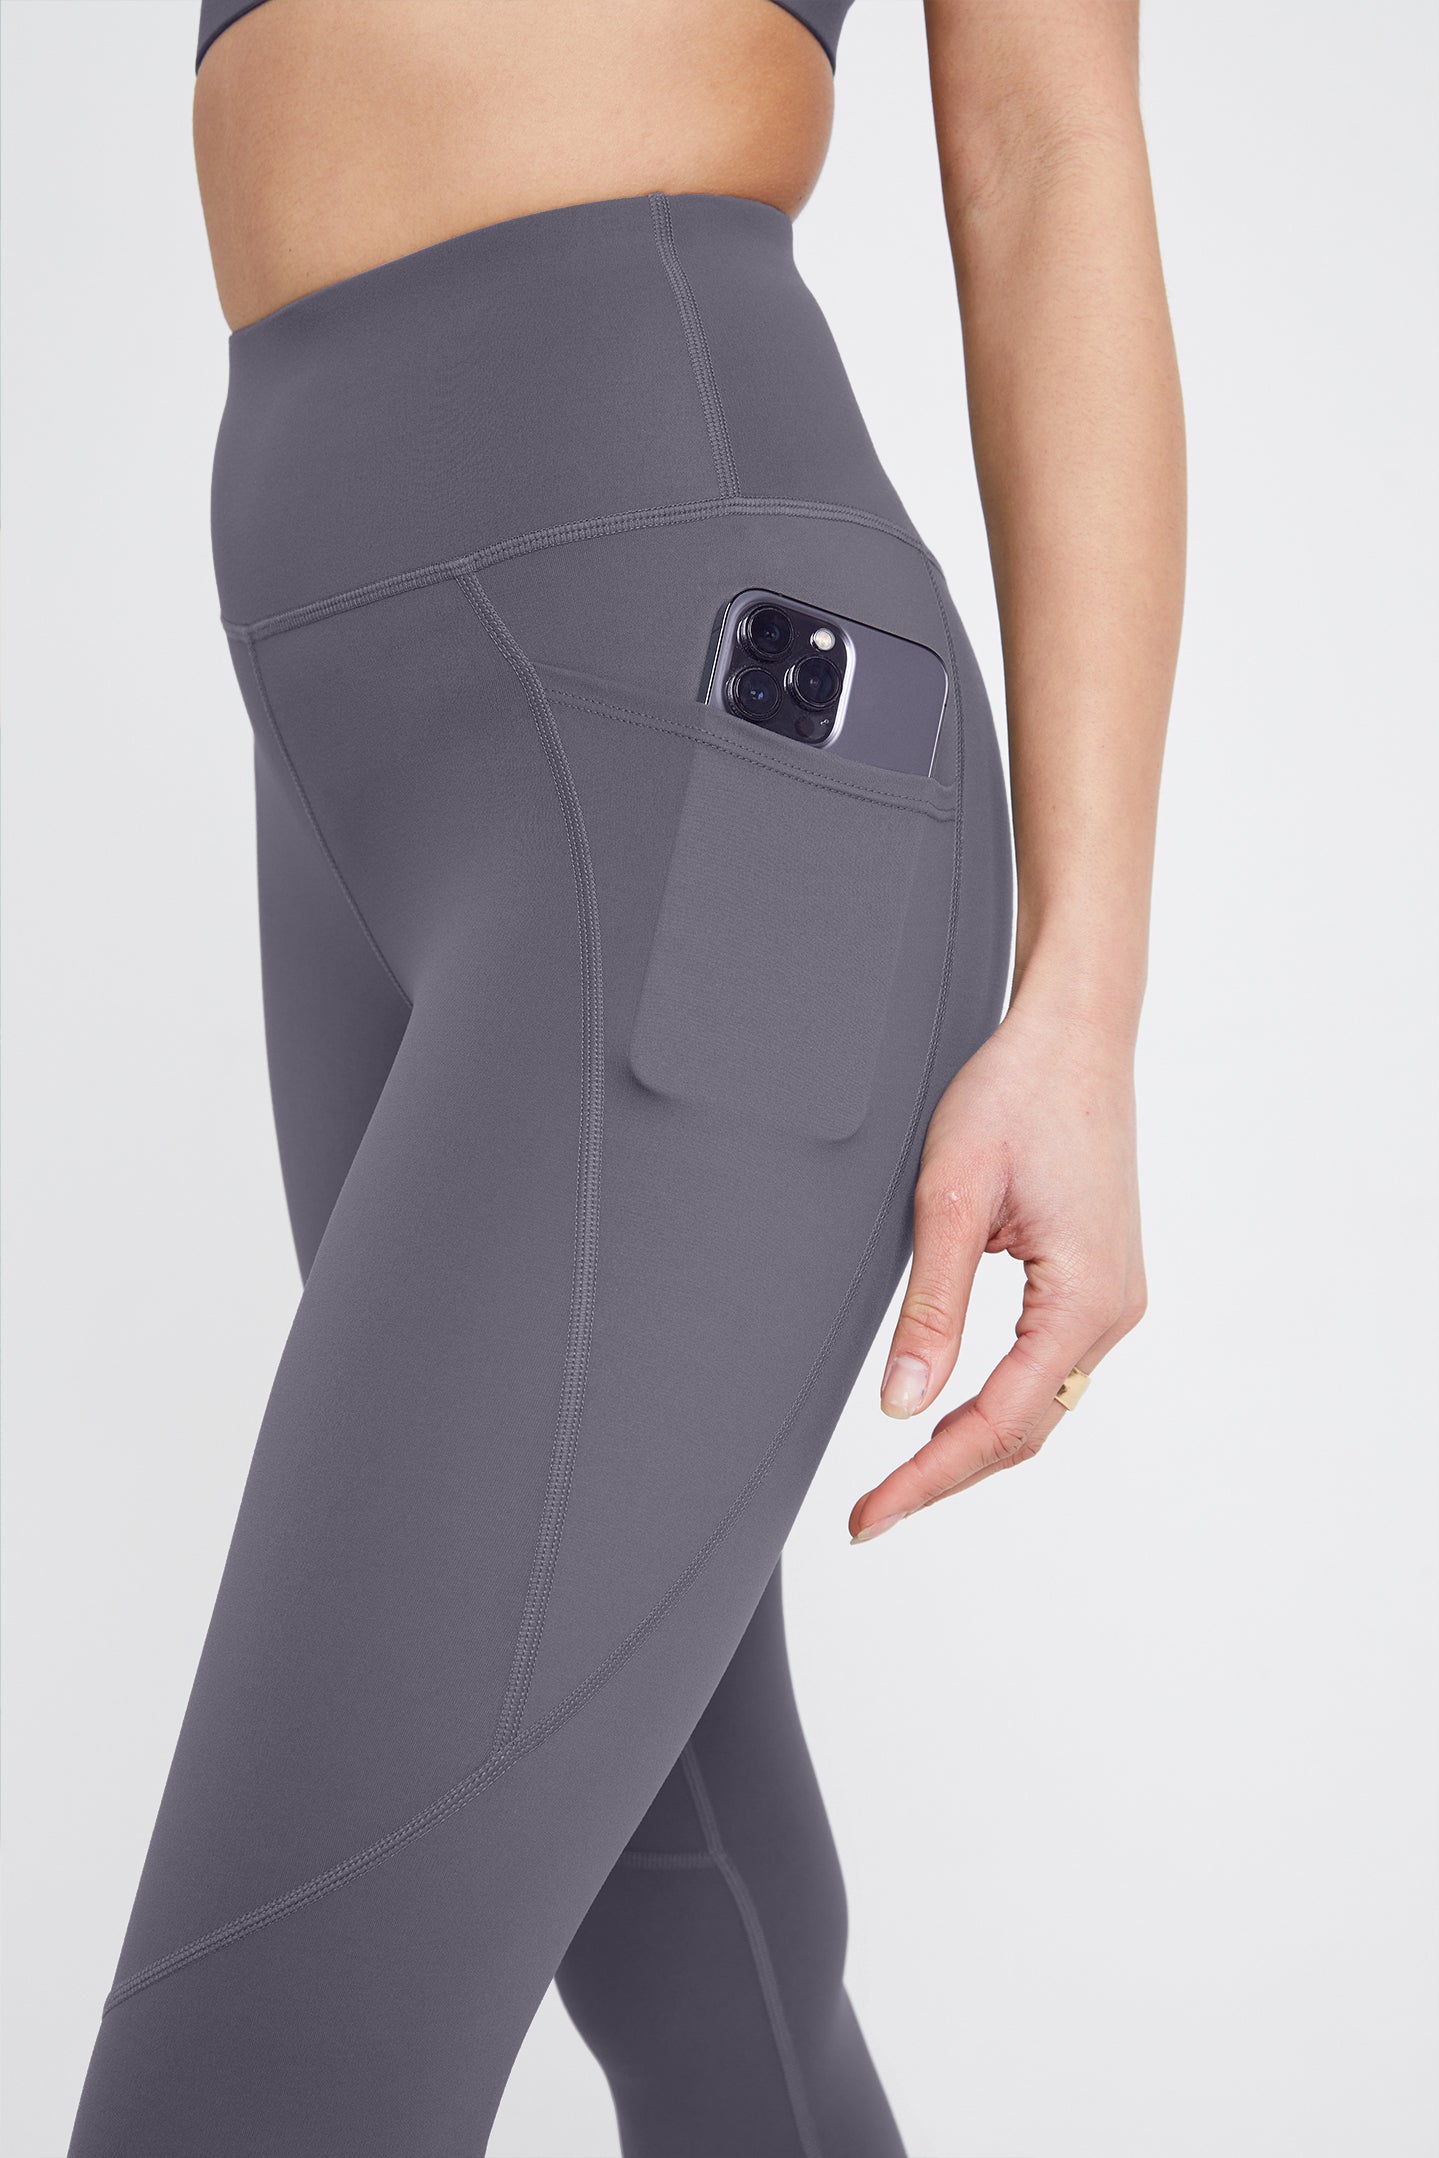 Should leggings have pockets? - Quora